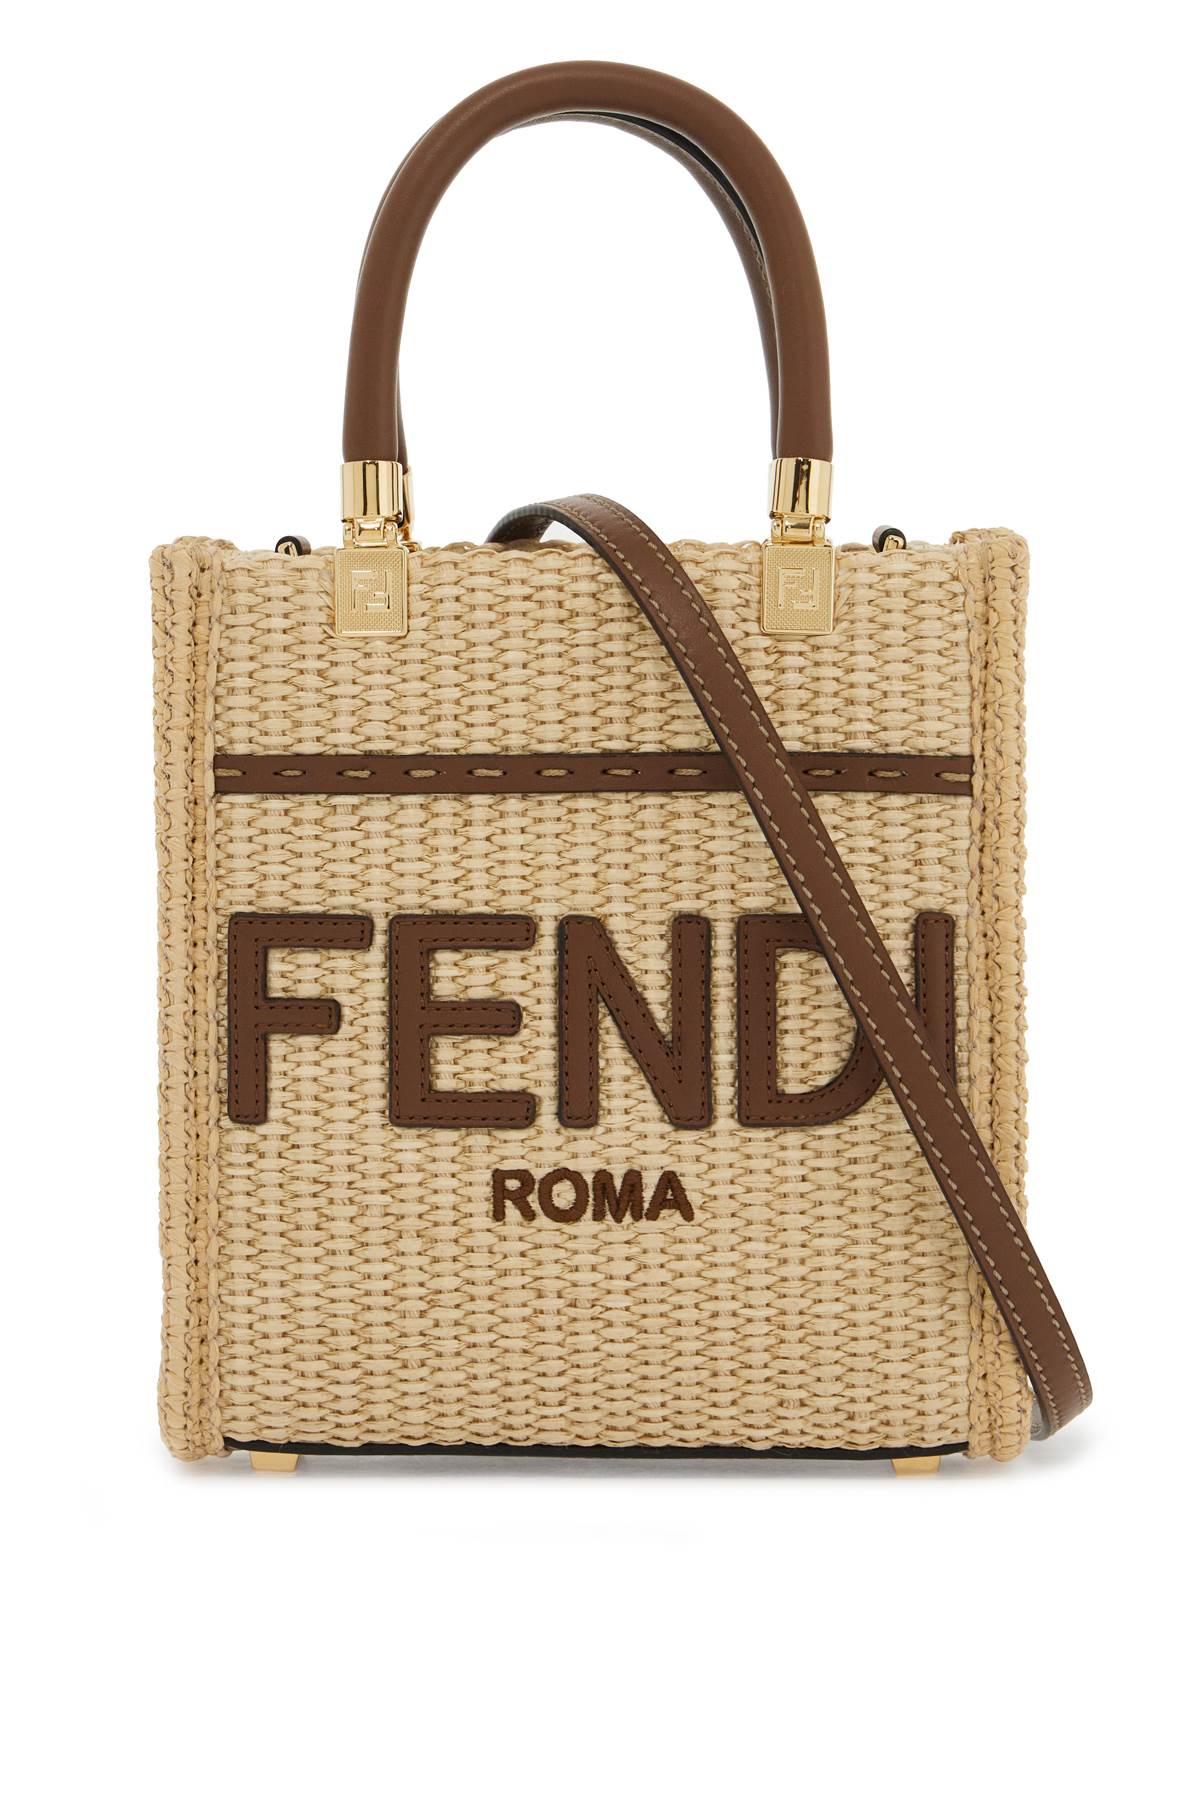 FENDI FENDI mini sunshine bag